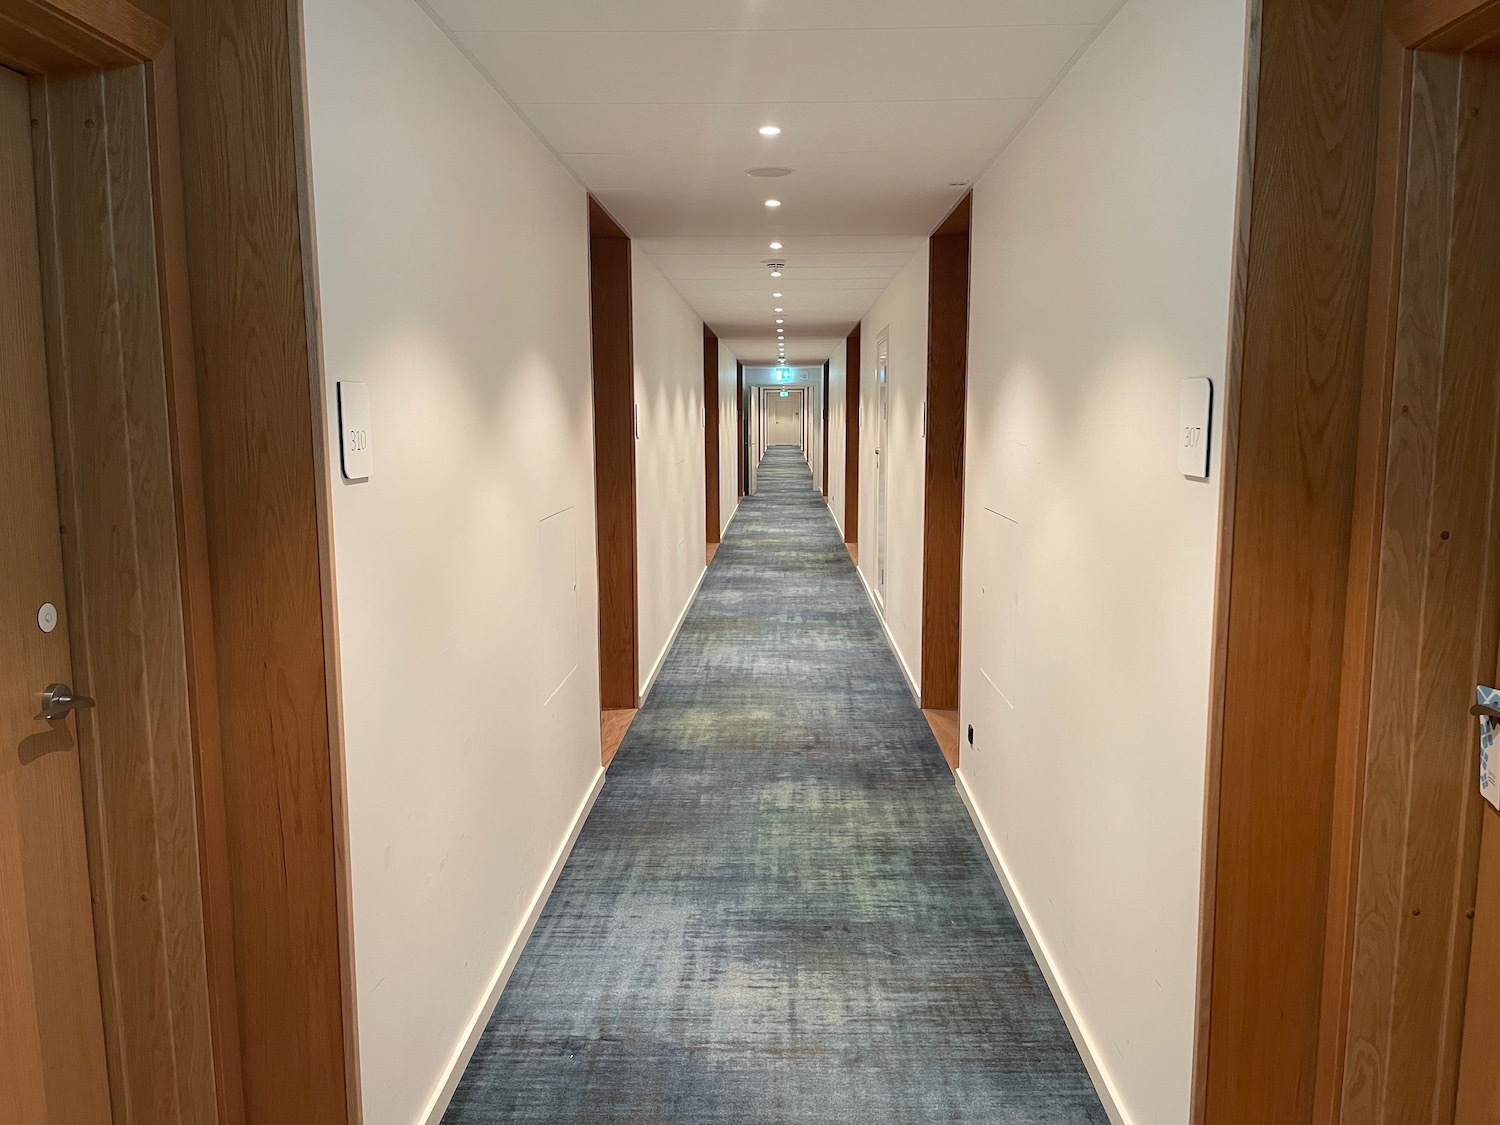 a long hallway with a blue carpet